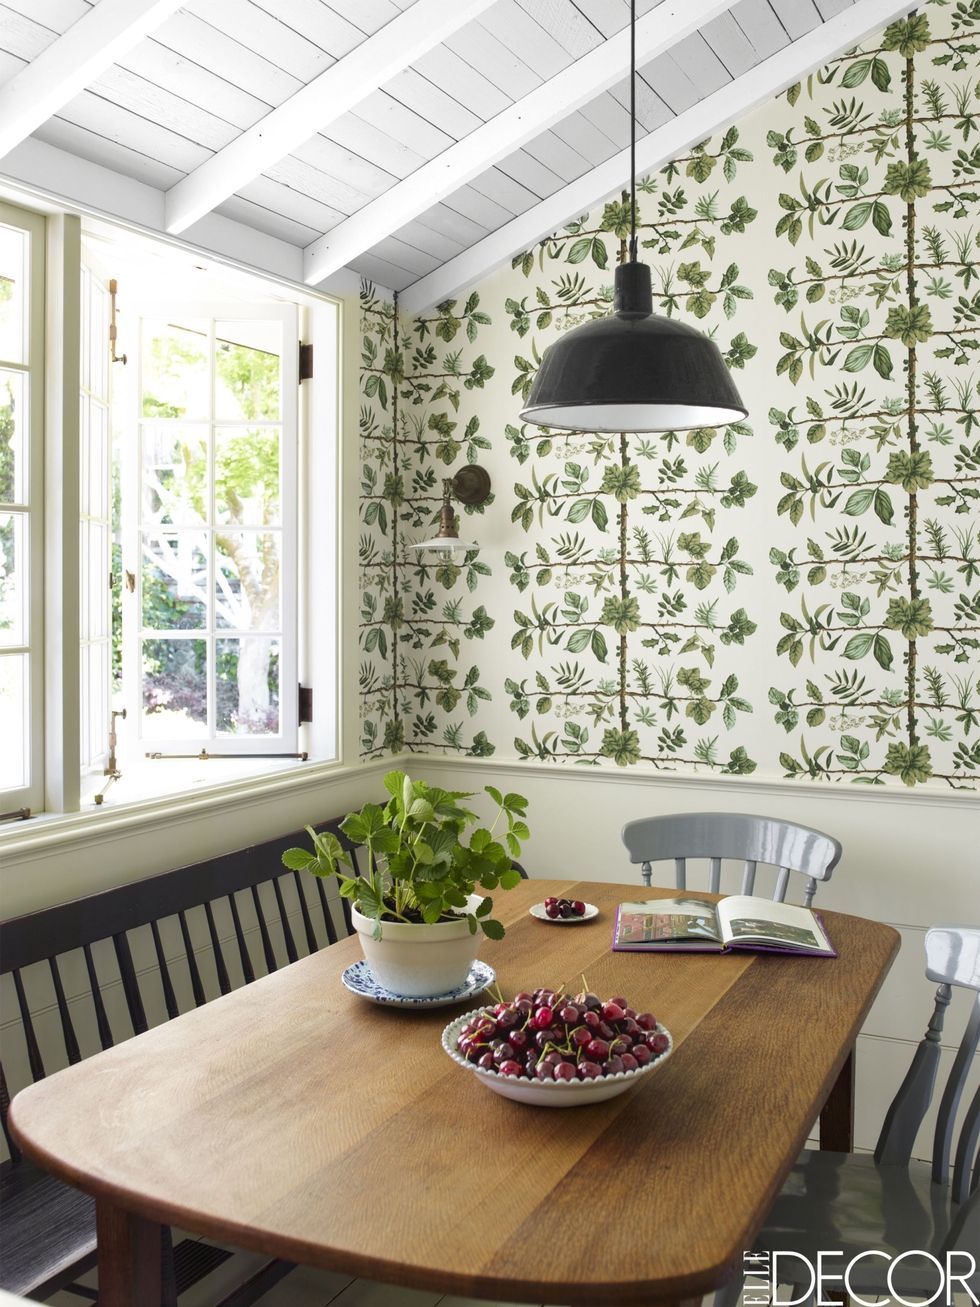 9 Inspiring Kitchen Wallpaper Ideas | The Family Handyman